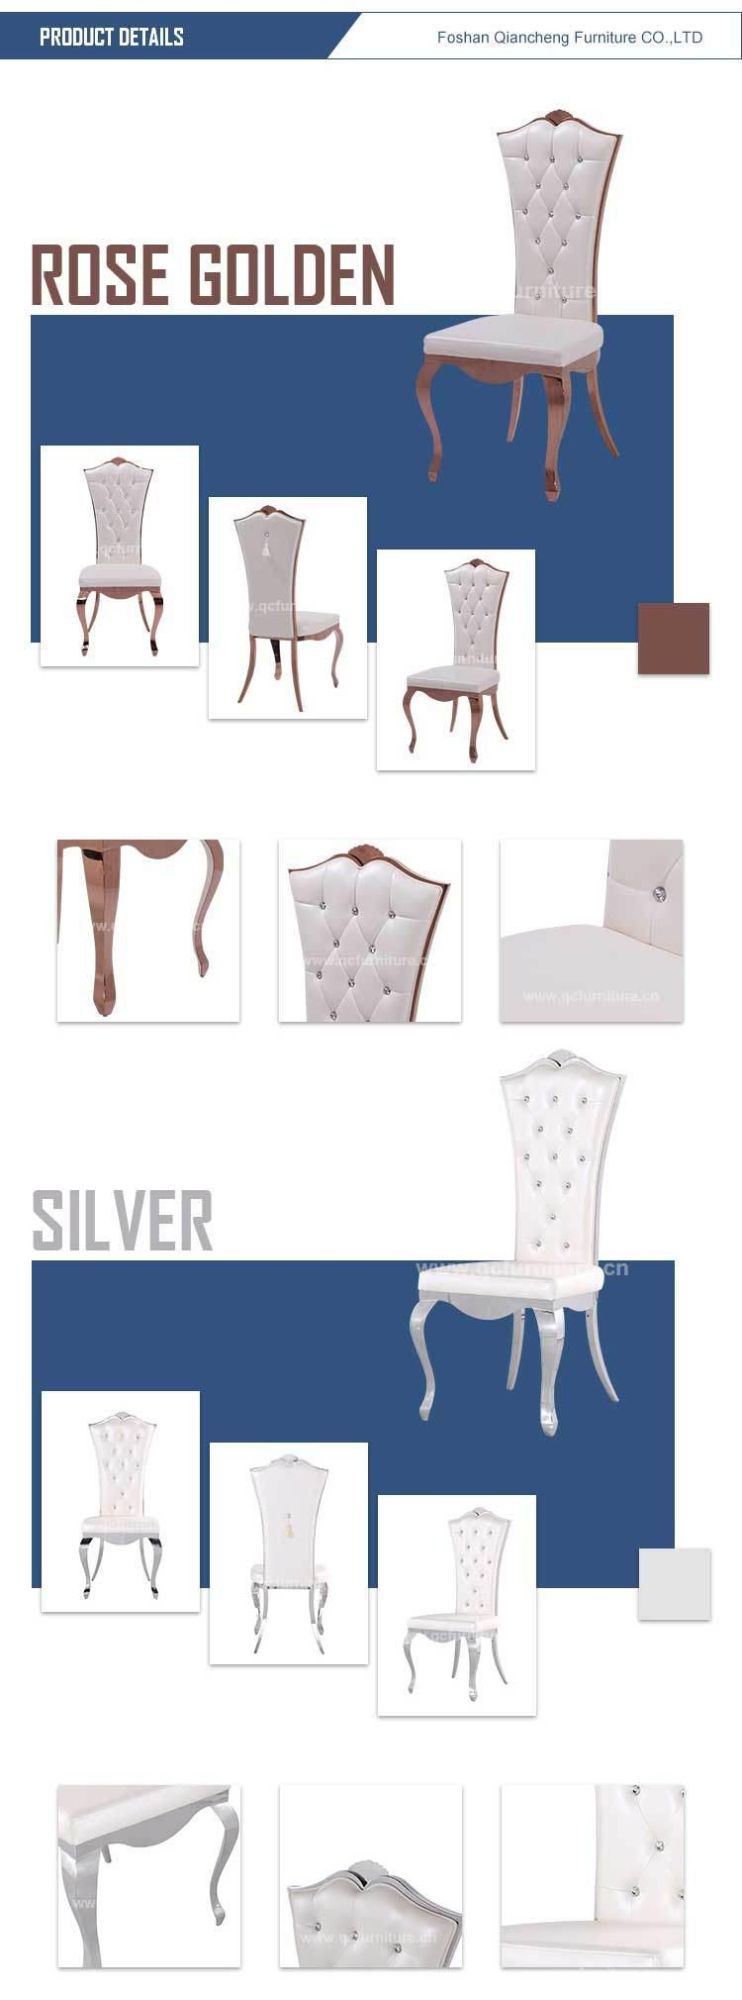 Restaurant Dining Furniture Modern Design Rose Golden Stainless Steel Dining Chair